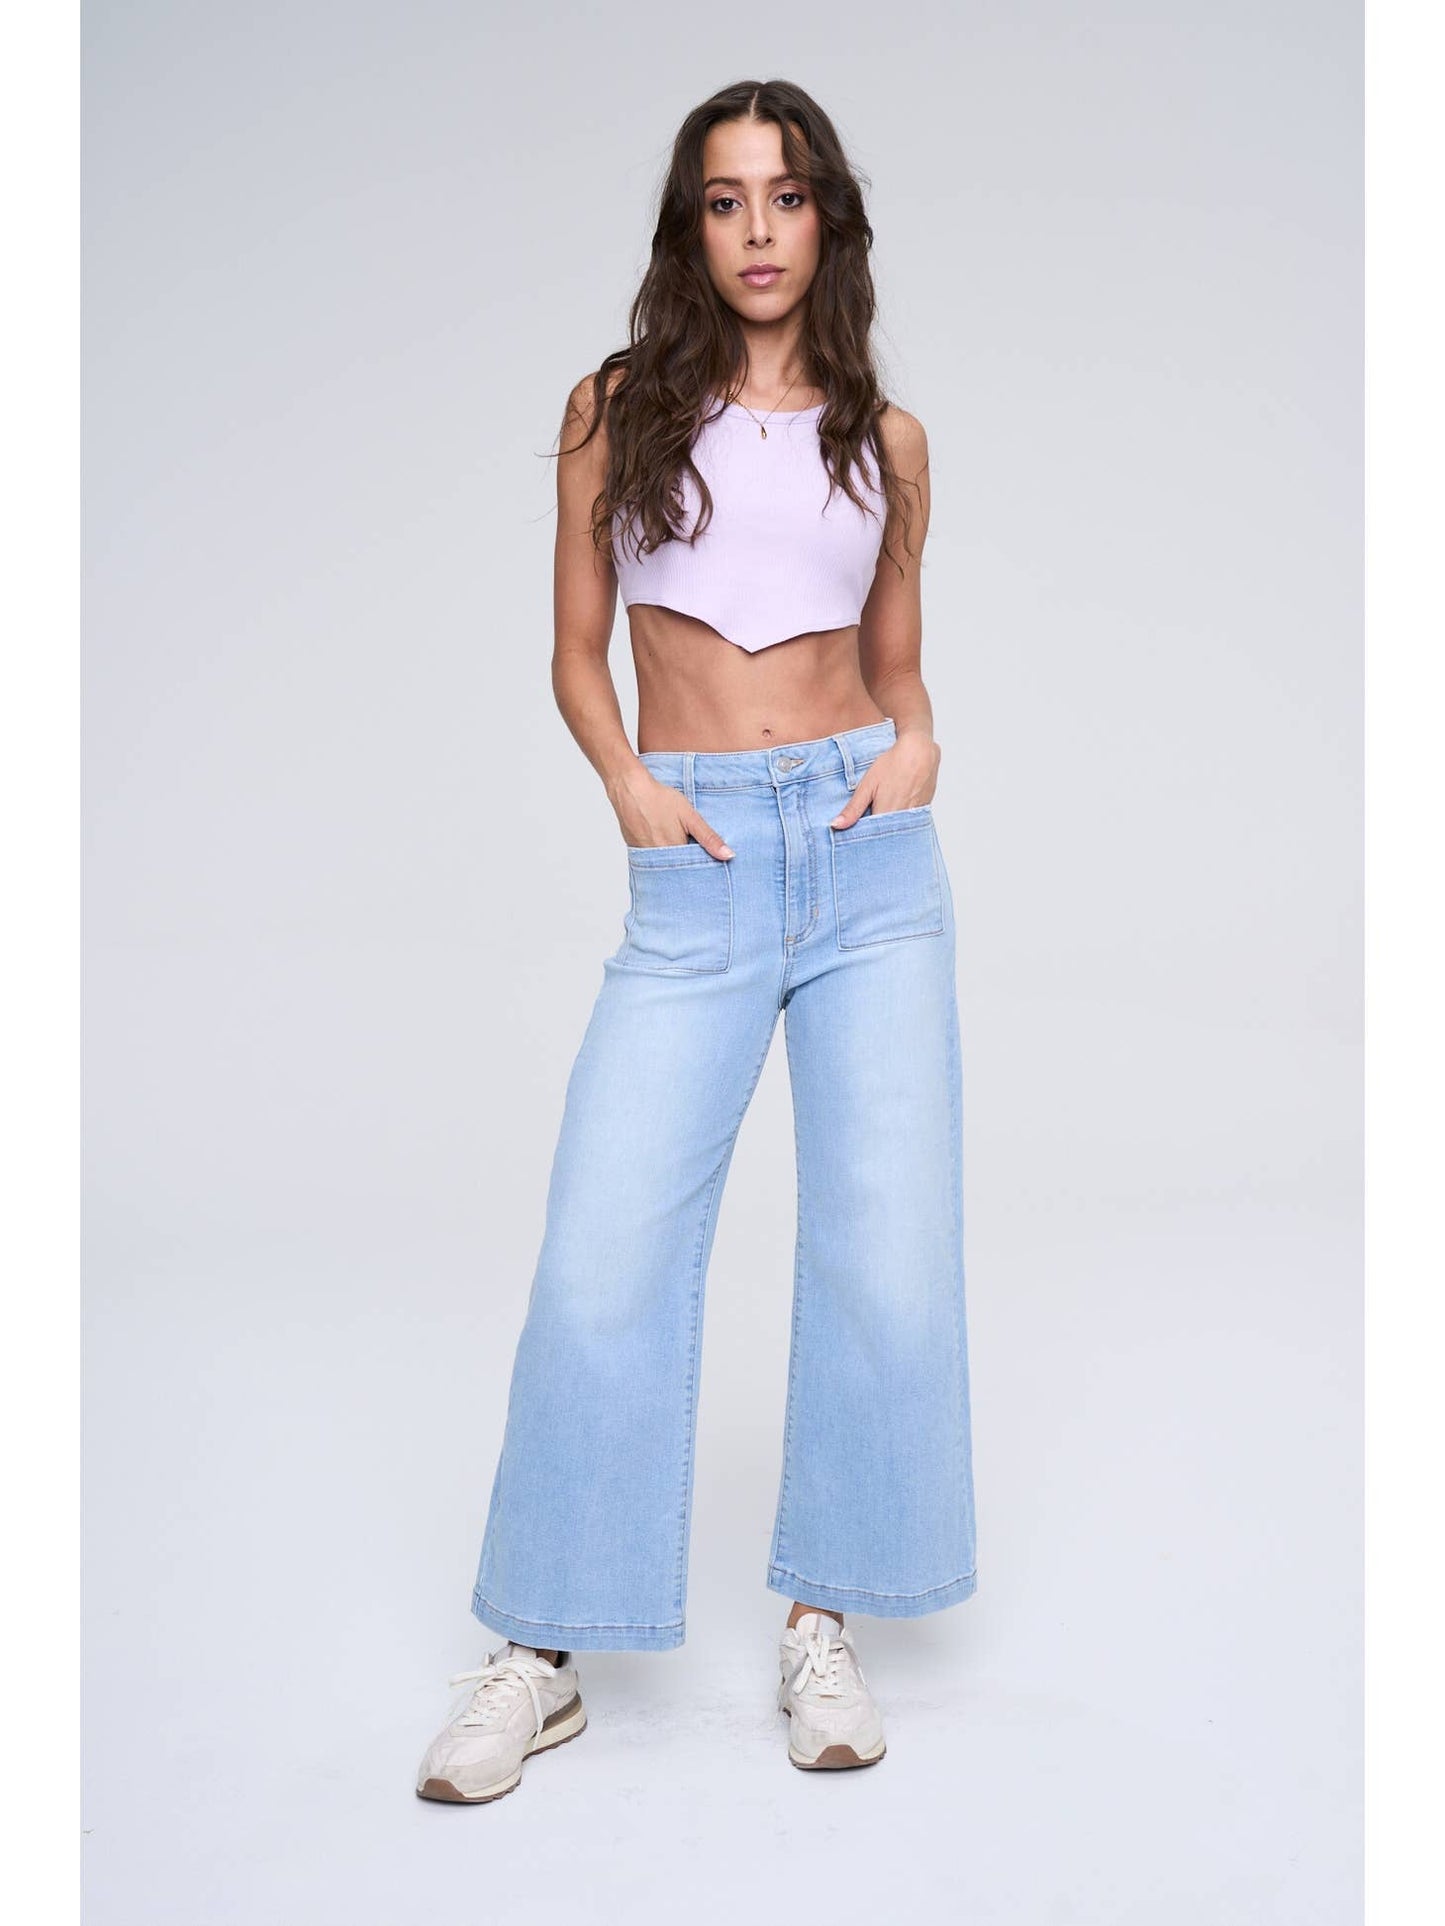 Piper Jeans SALE